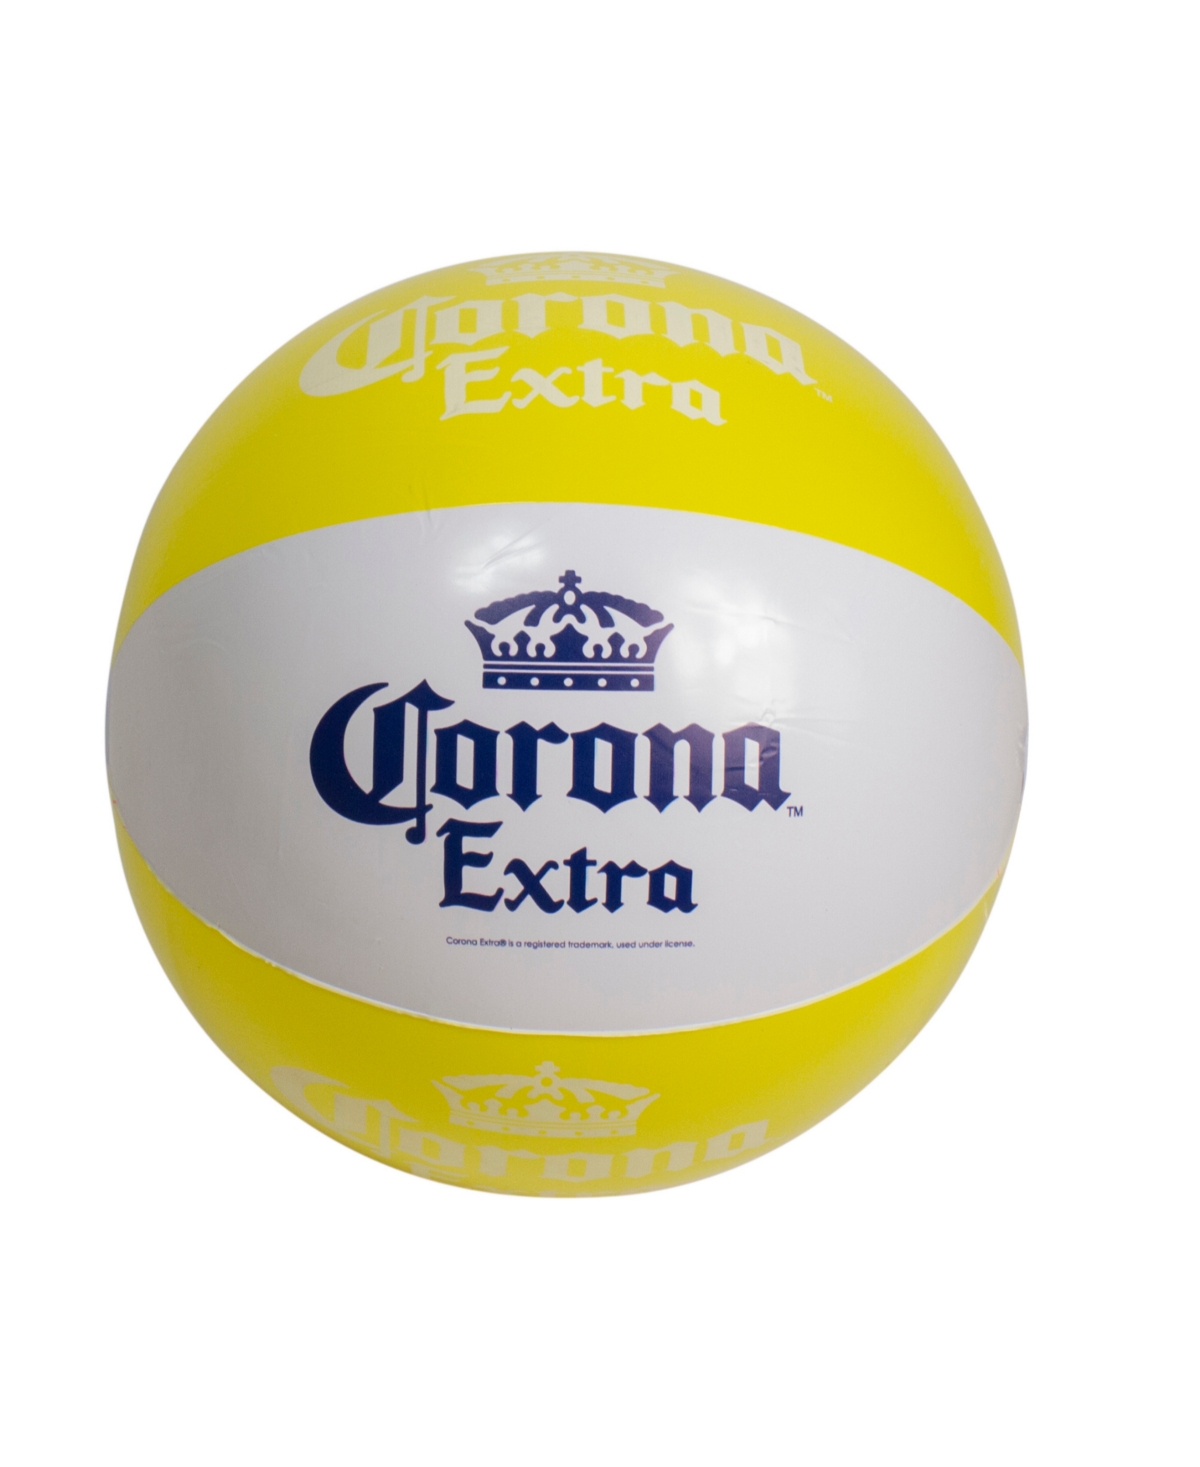 20" Corona Tropical Yellow and White Inflatable Beach Ball - Yellow